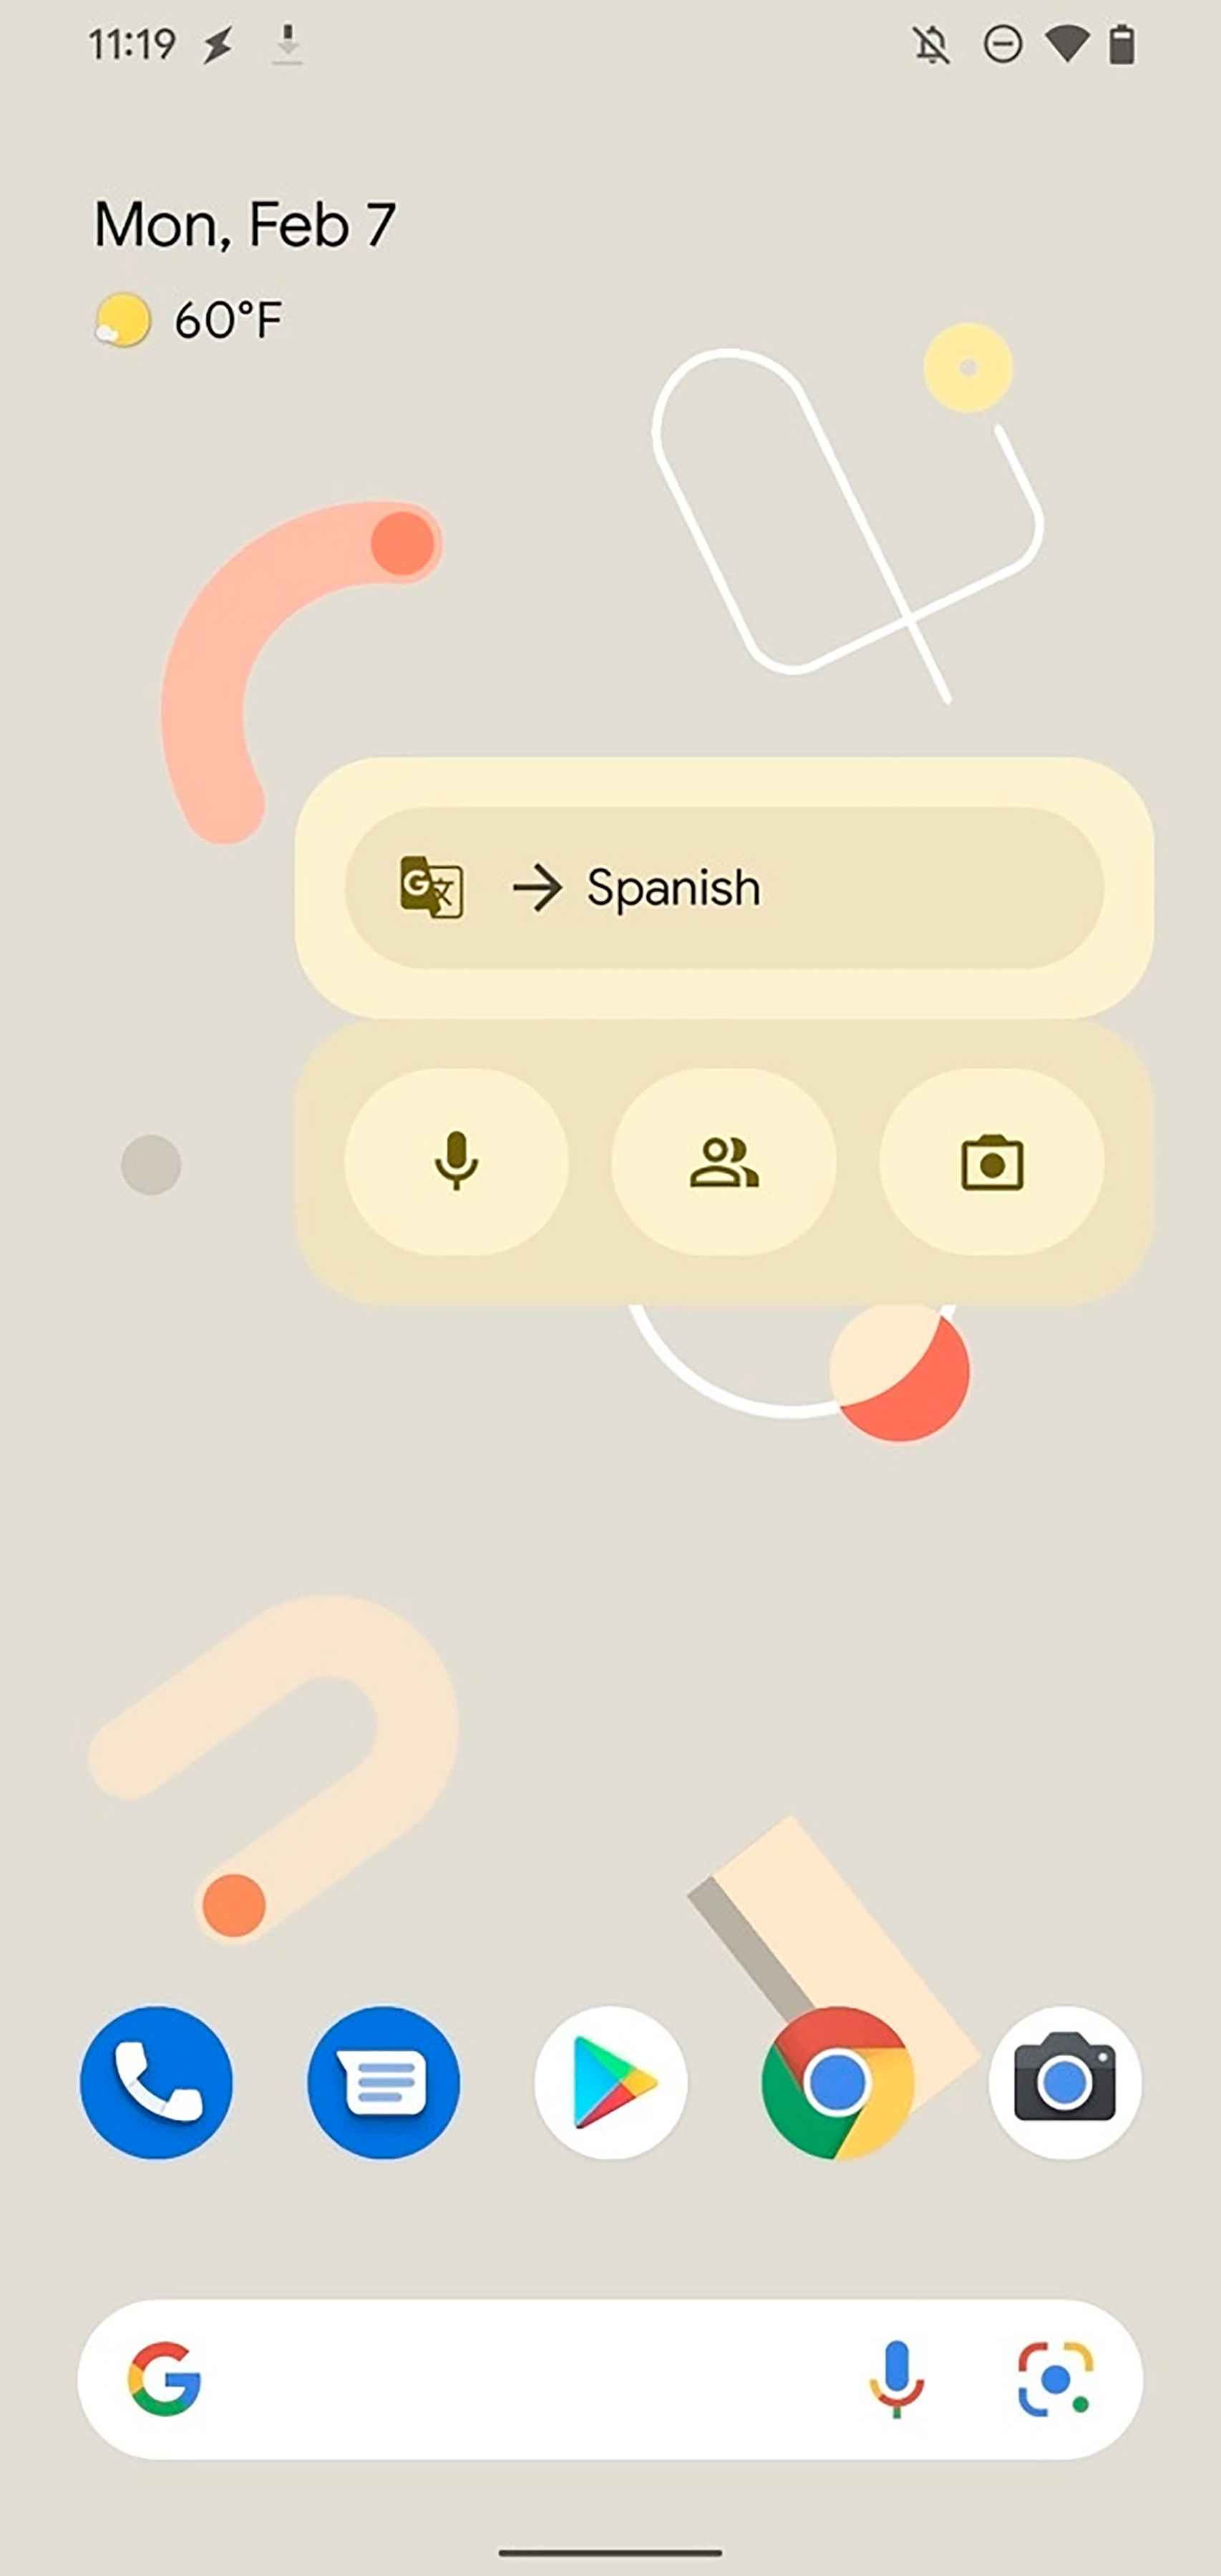 Google Translate with its new widget